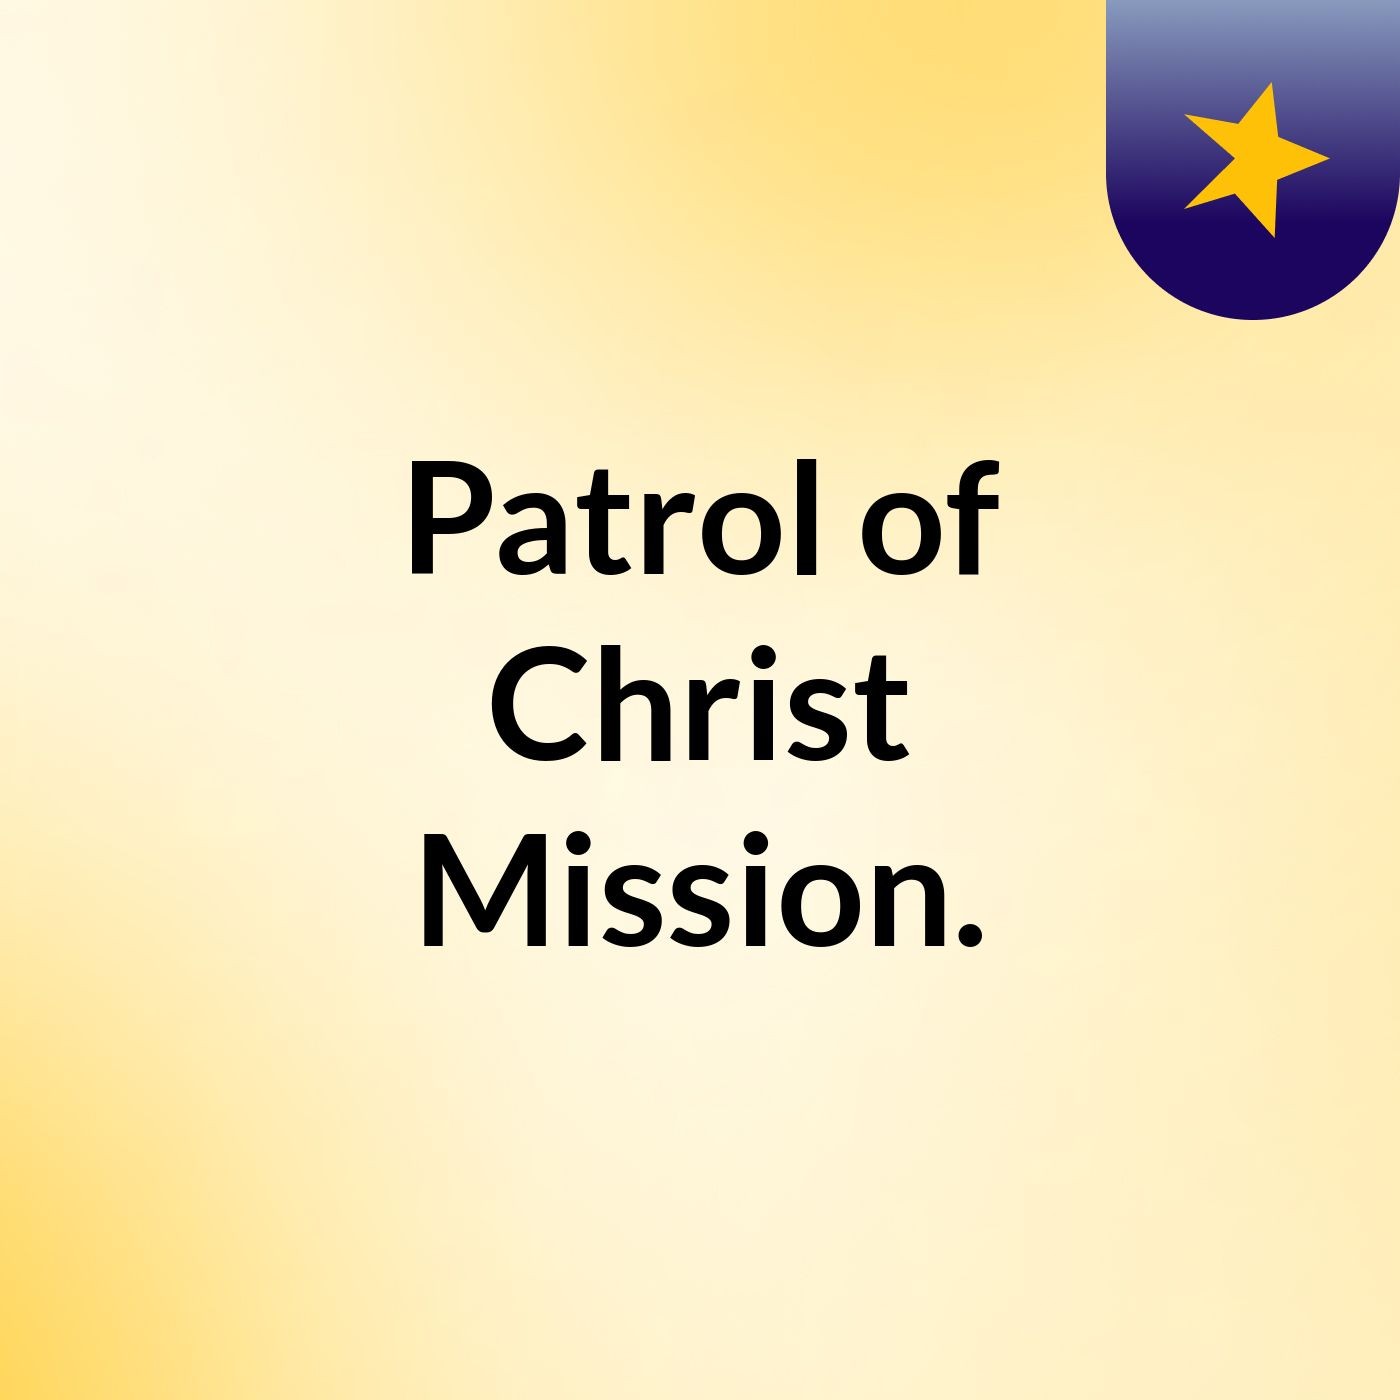 Patrol of Christ Mission.